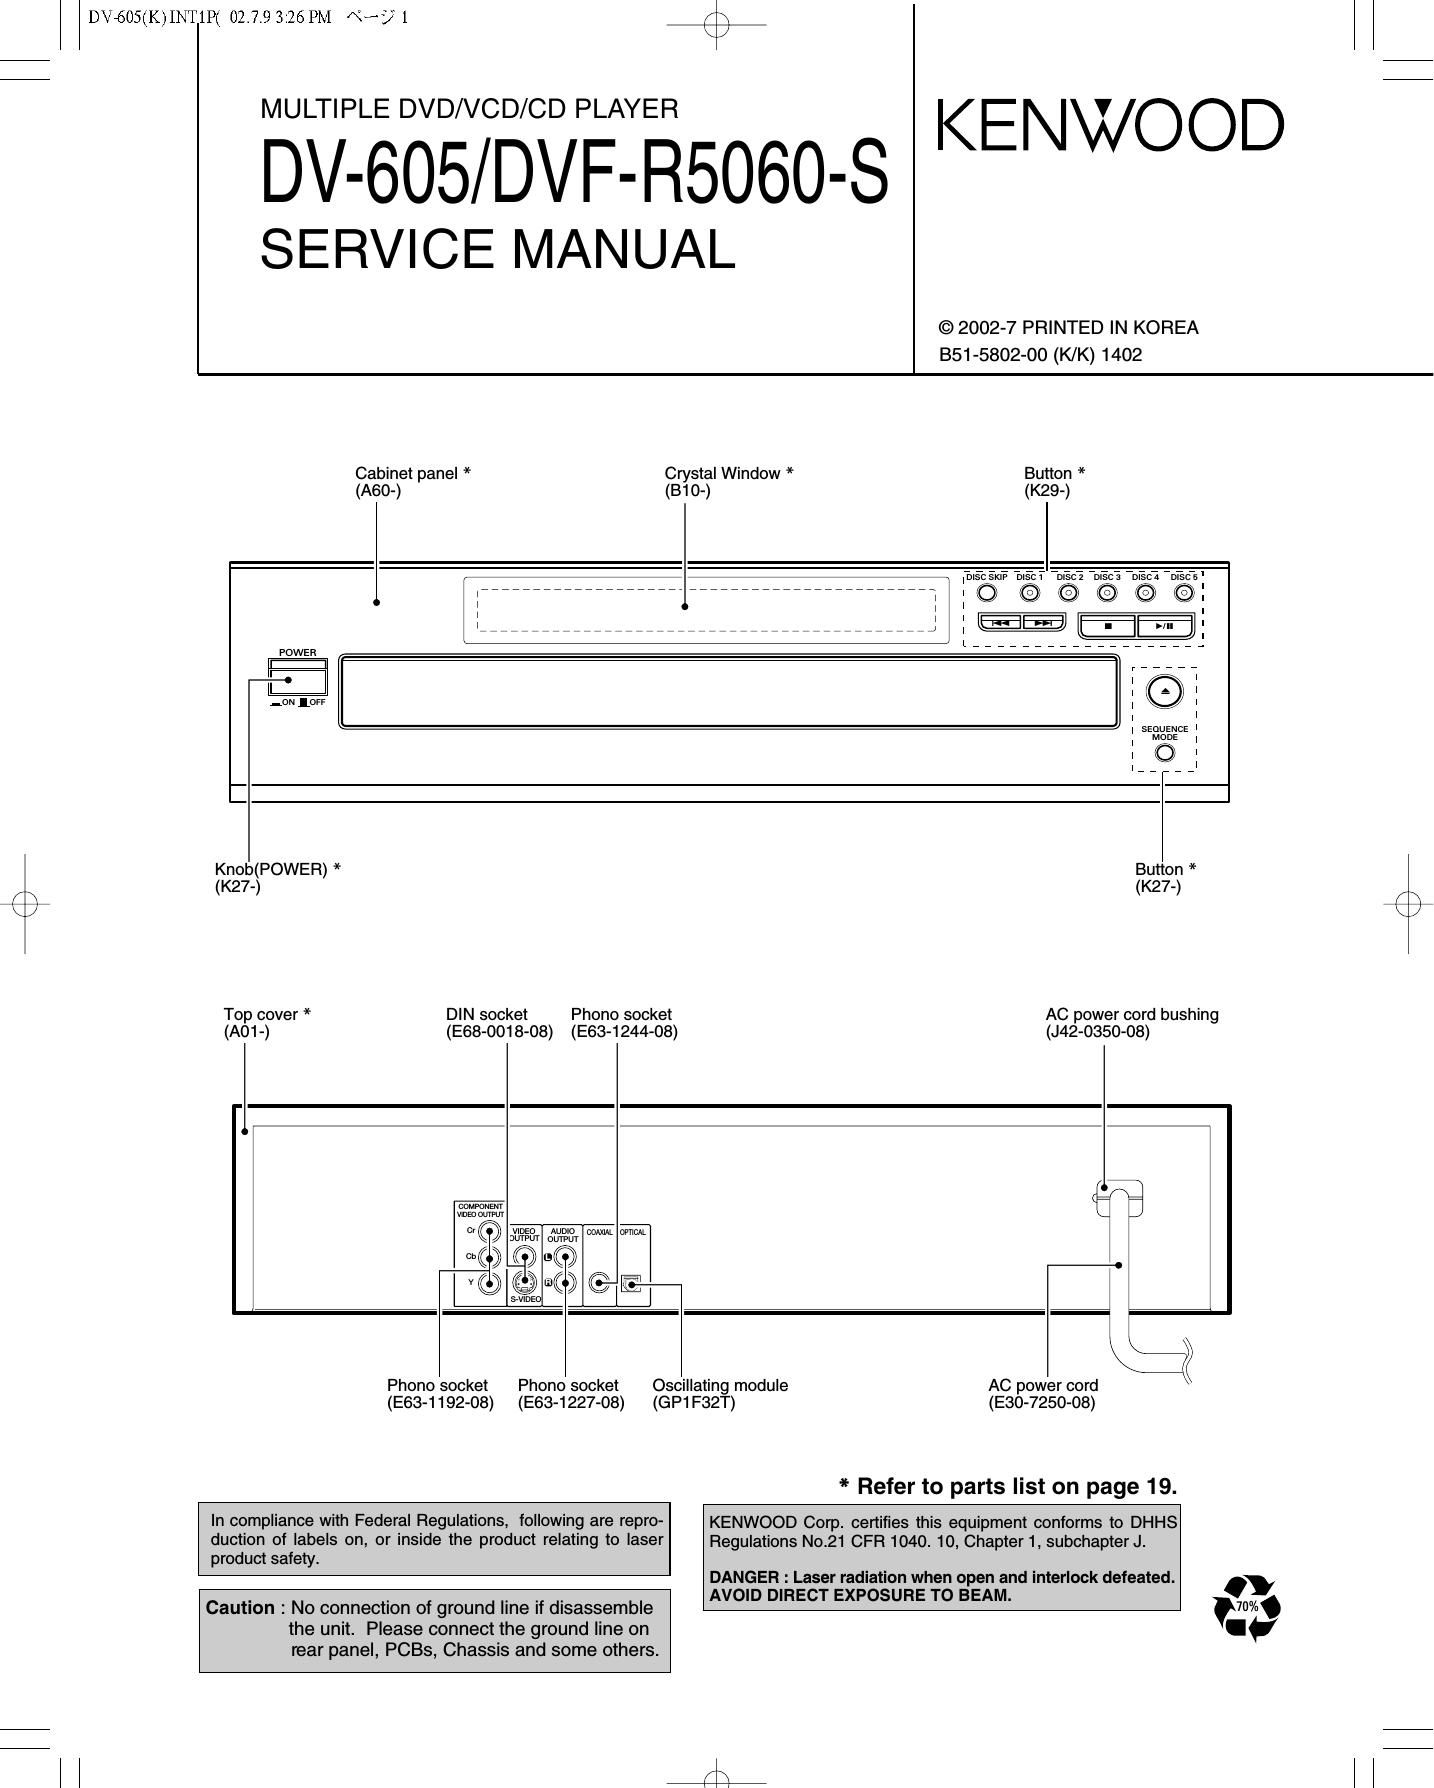 Kenwood DVFR 5060 S Service Manual